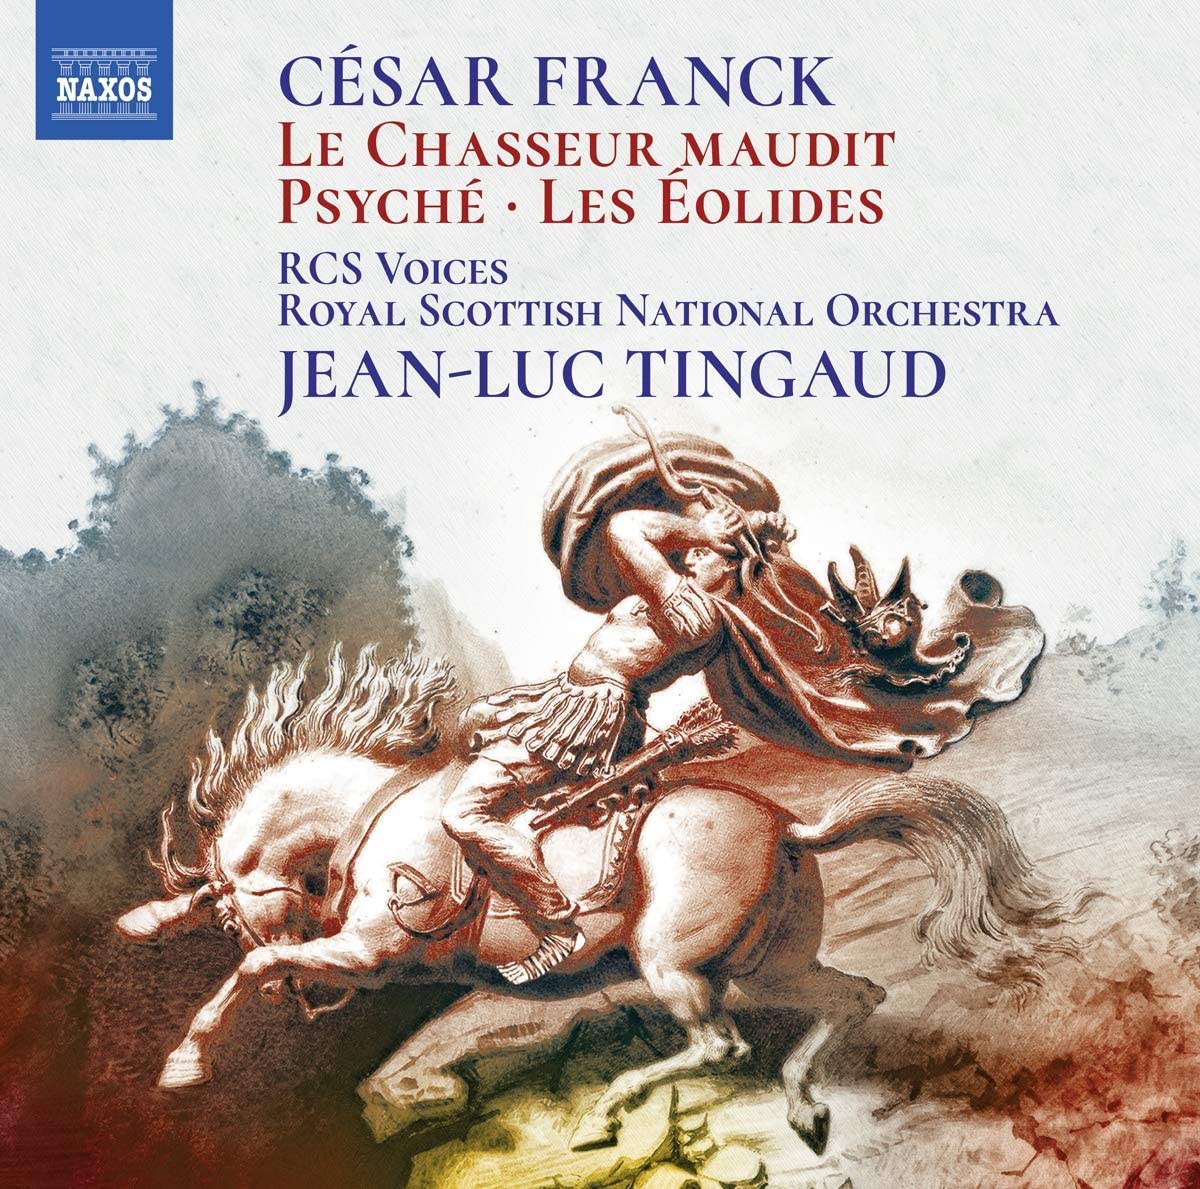 Review of FRANCK Le Chasseur maudit. Psyche. Les Eolides